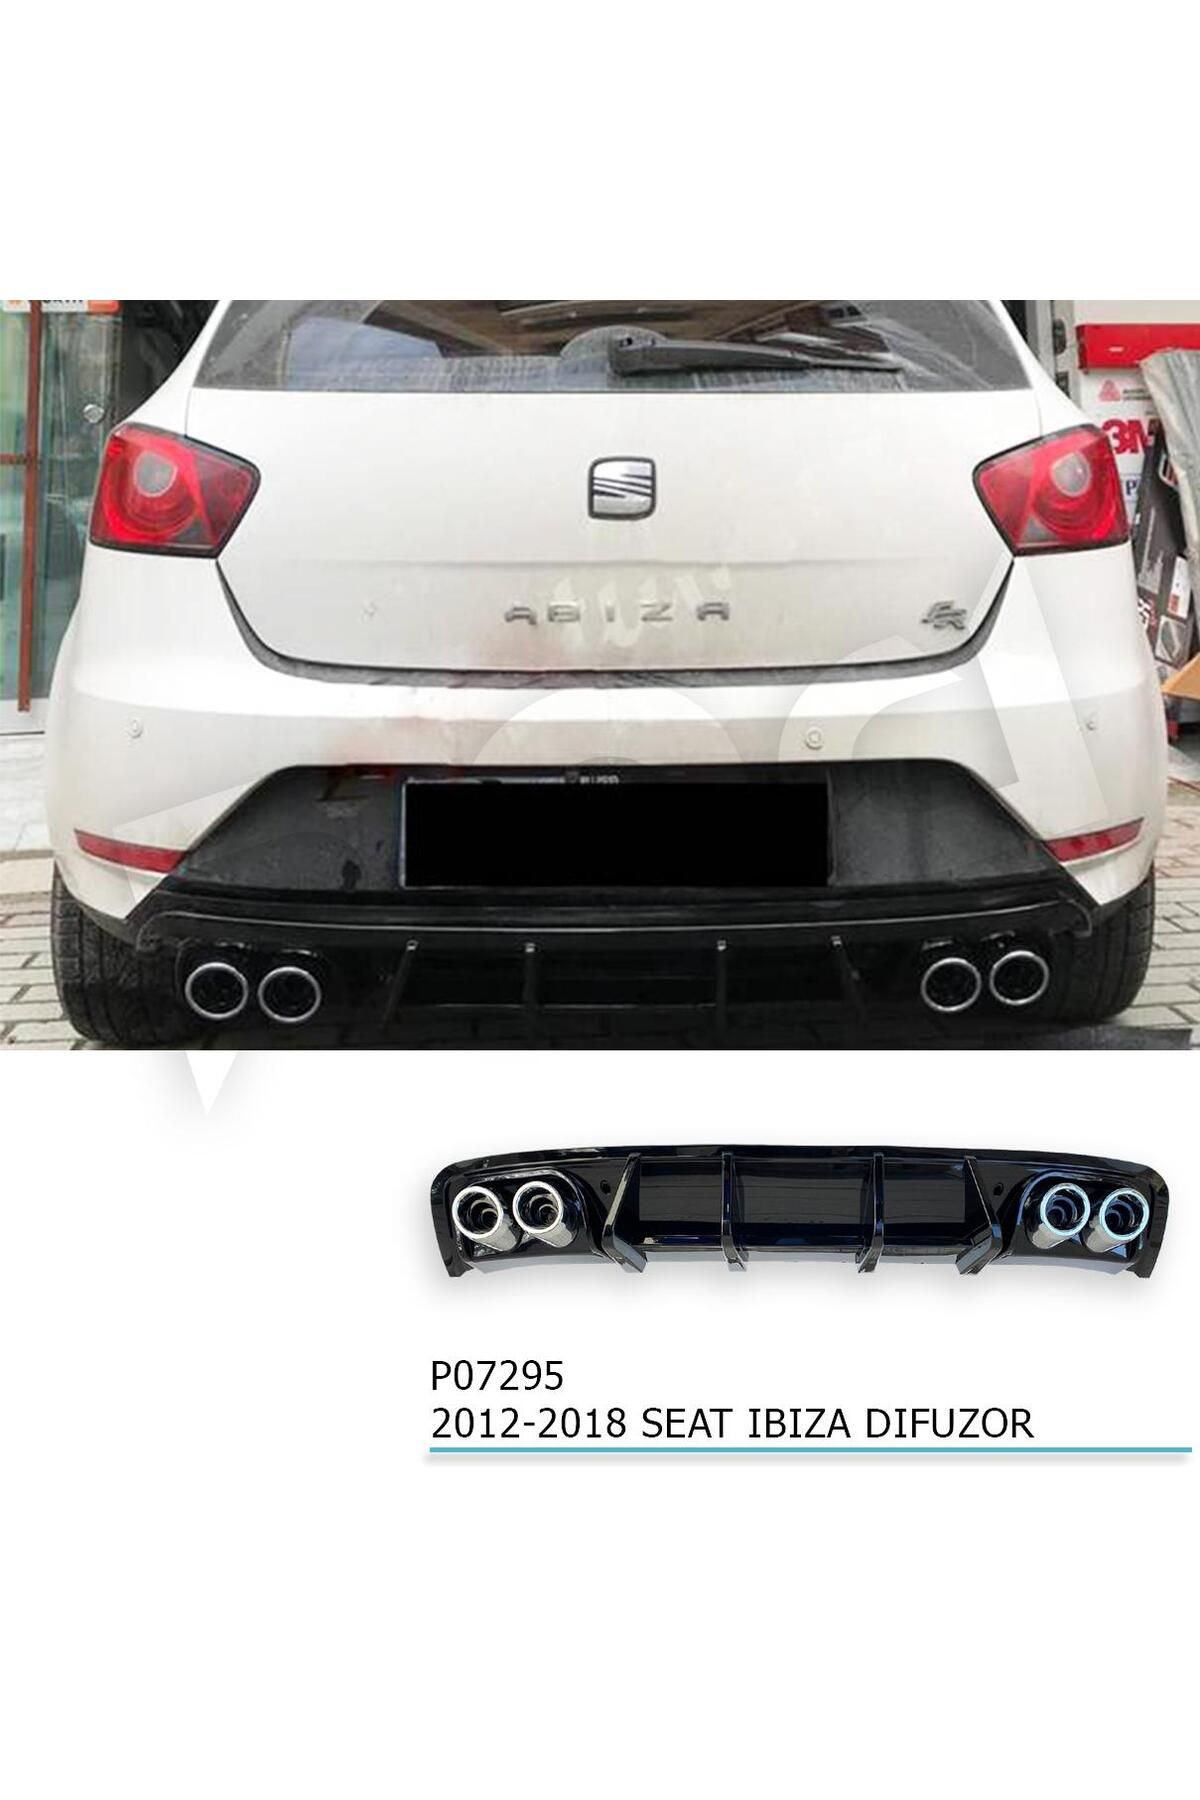 TayFa Otomopa 2012-2018 SEAT IBIZA DIFUZOR - Üretici Firma : BOGAZICI